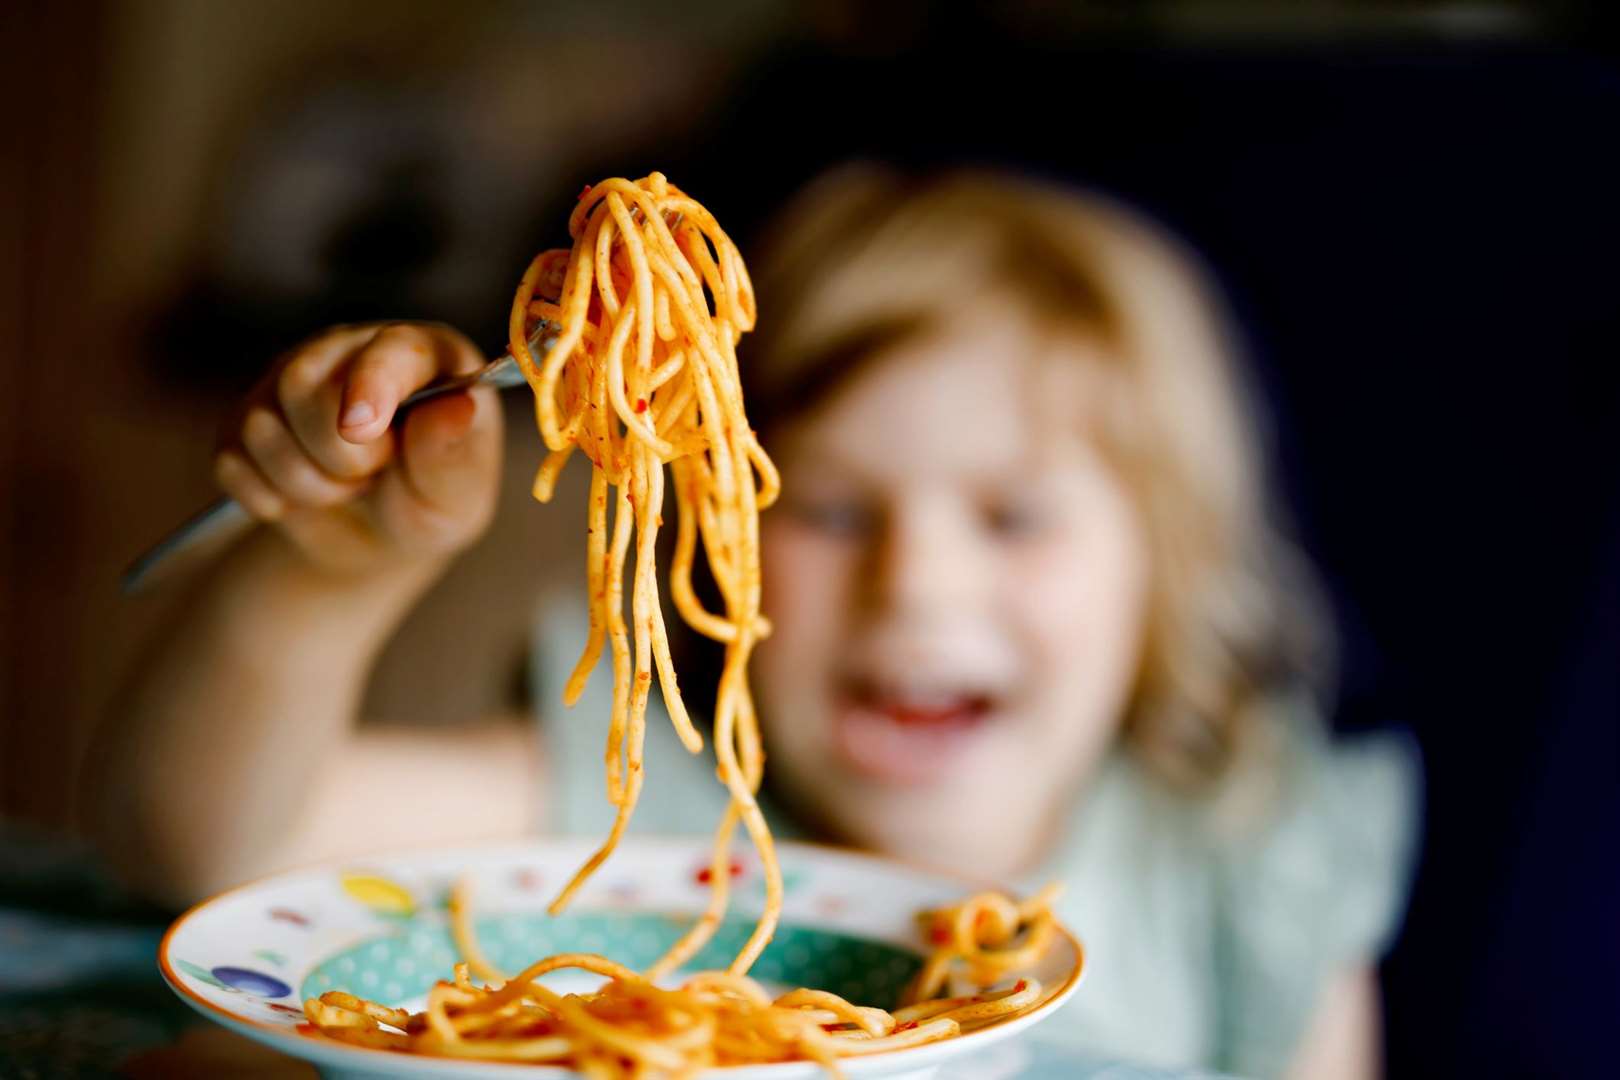 Action on Salt has studied the children’s meals sold in restaurants. Image: iStock/romrodinka.